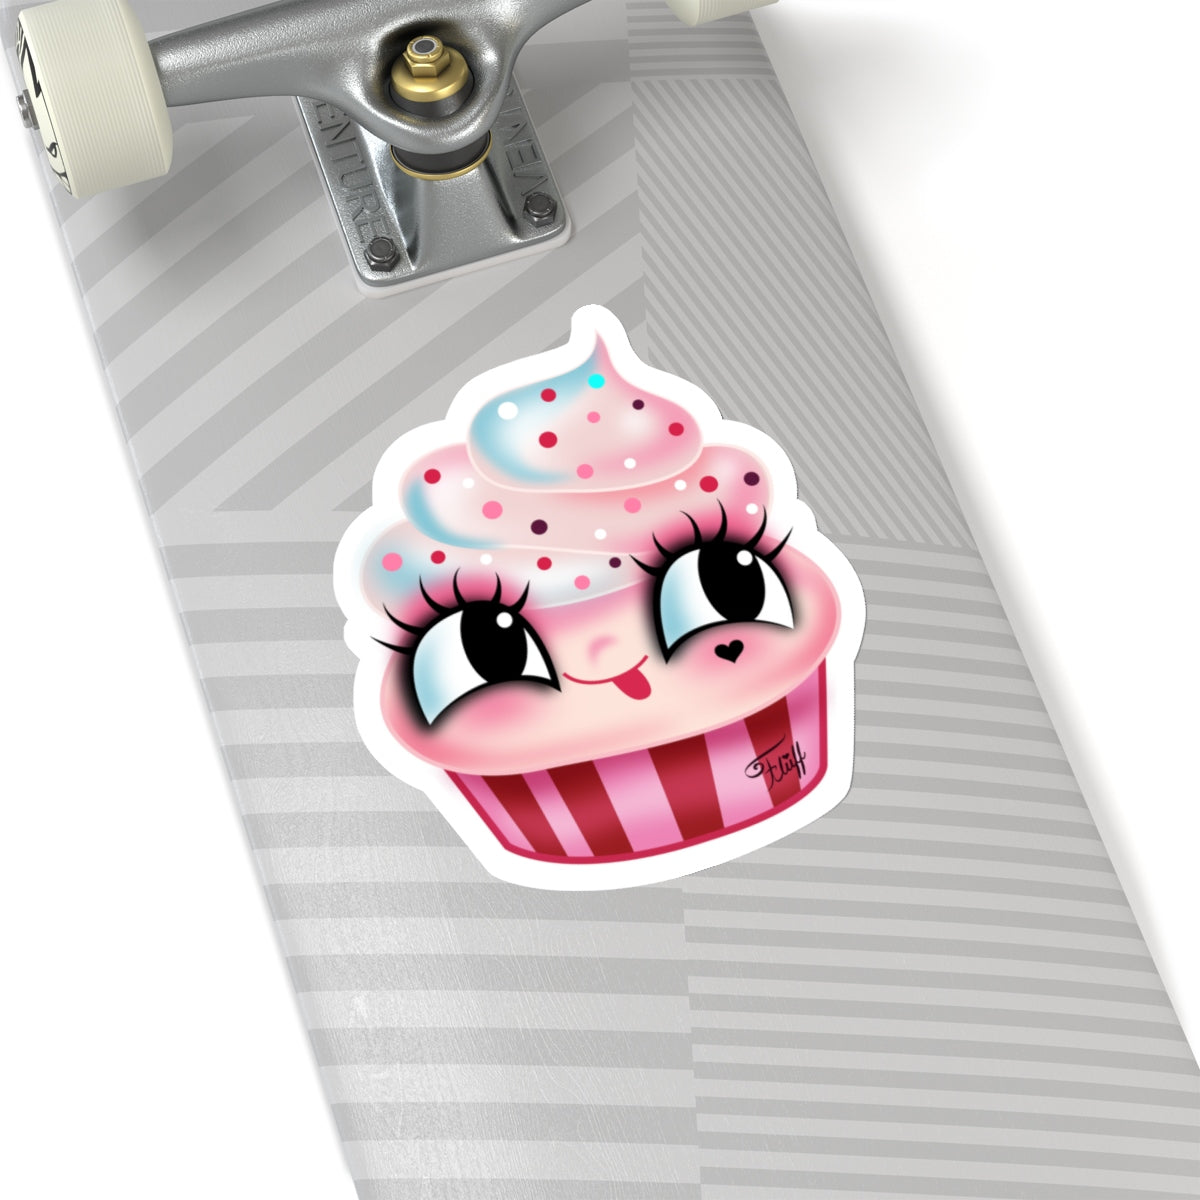 Cute Cupcake • Kiss-Cut Sticker